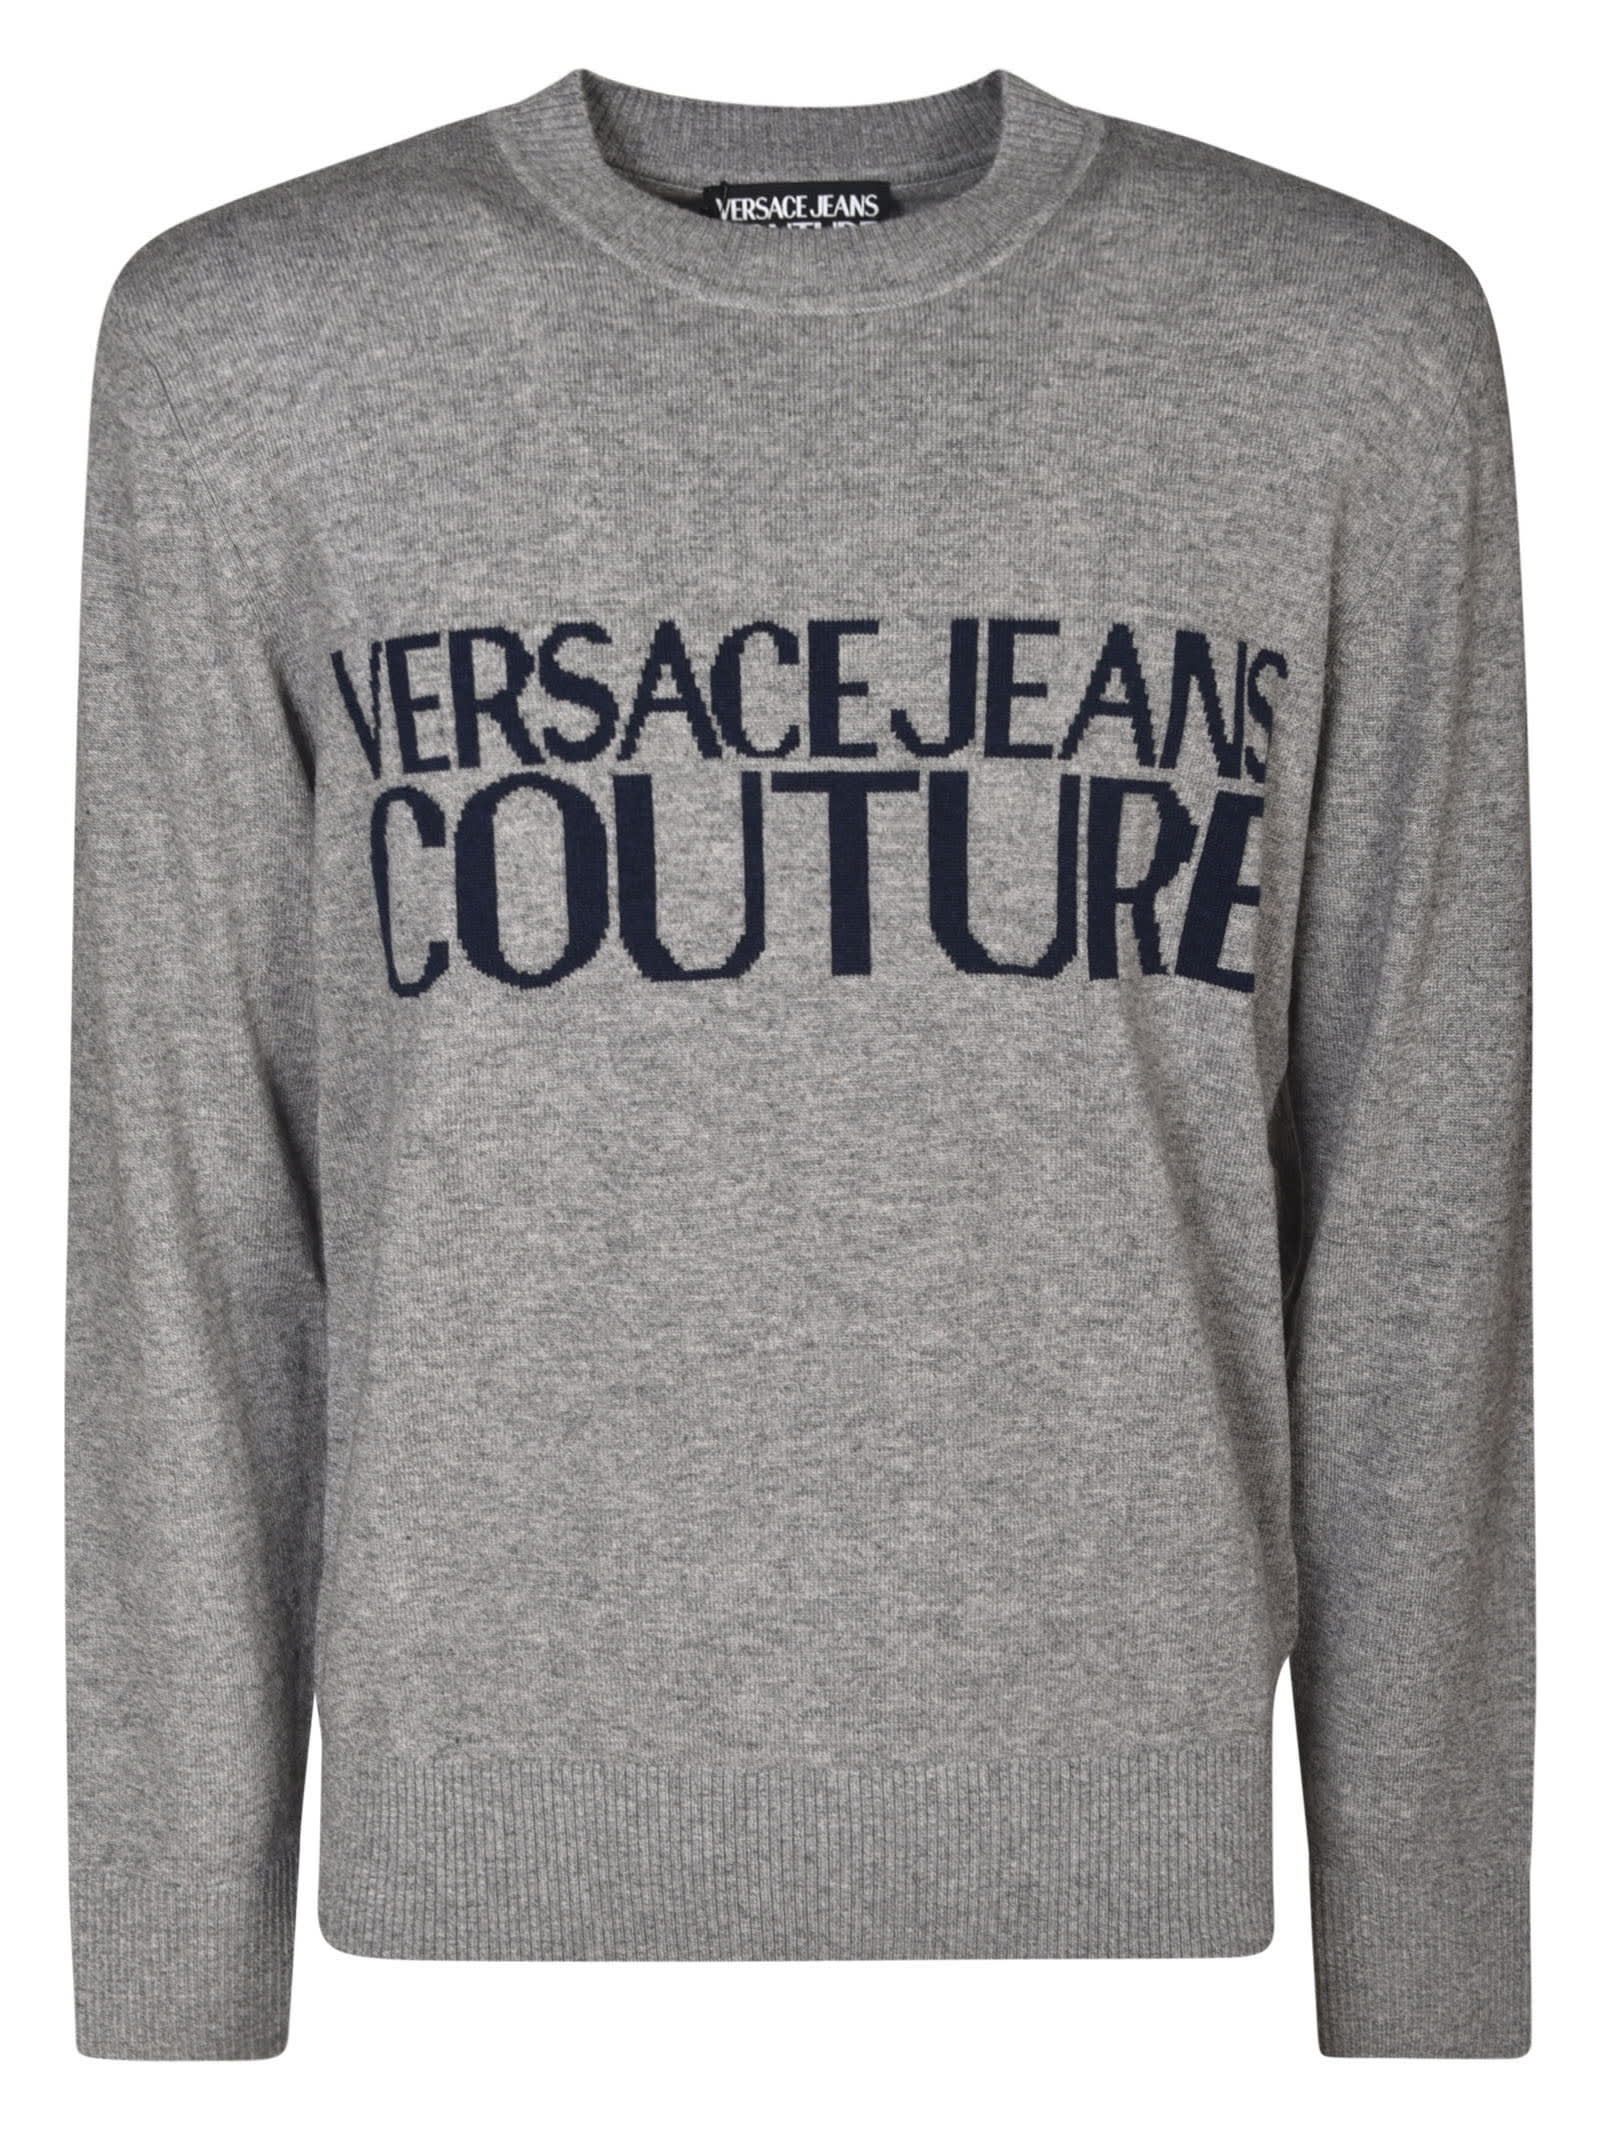 Jeans Couture Sweatshirt In Grey | ModeSens